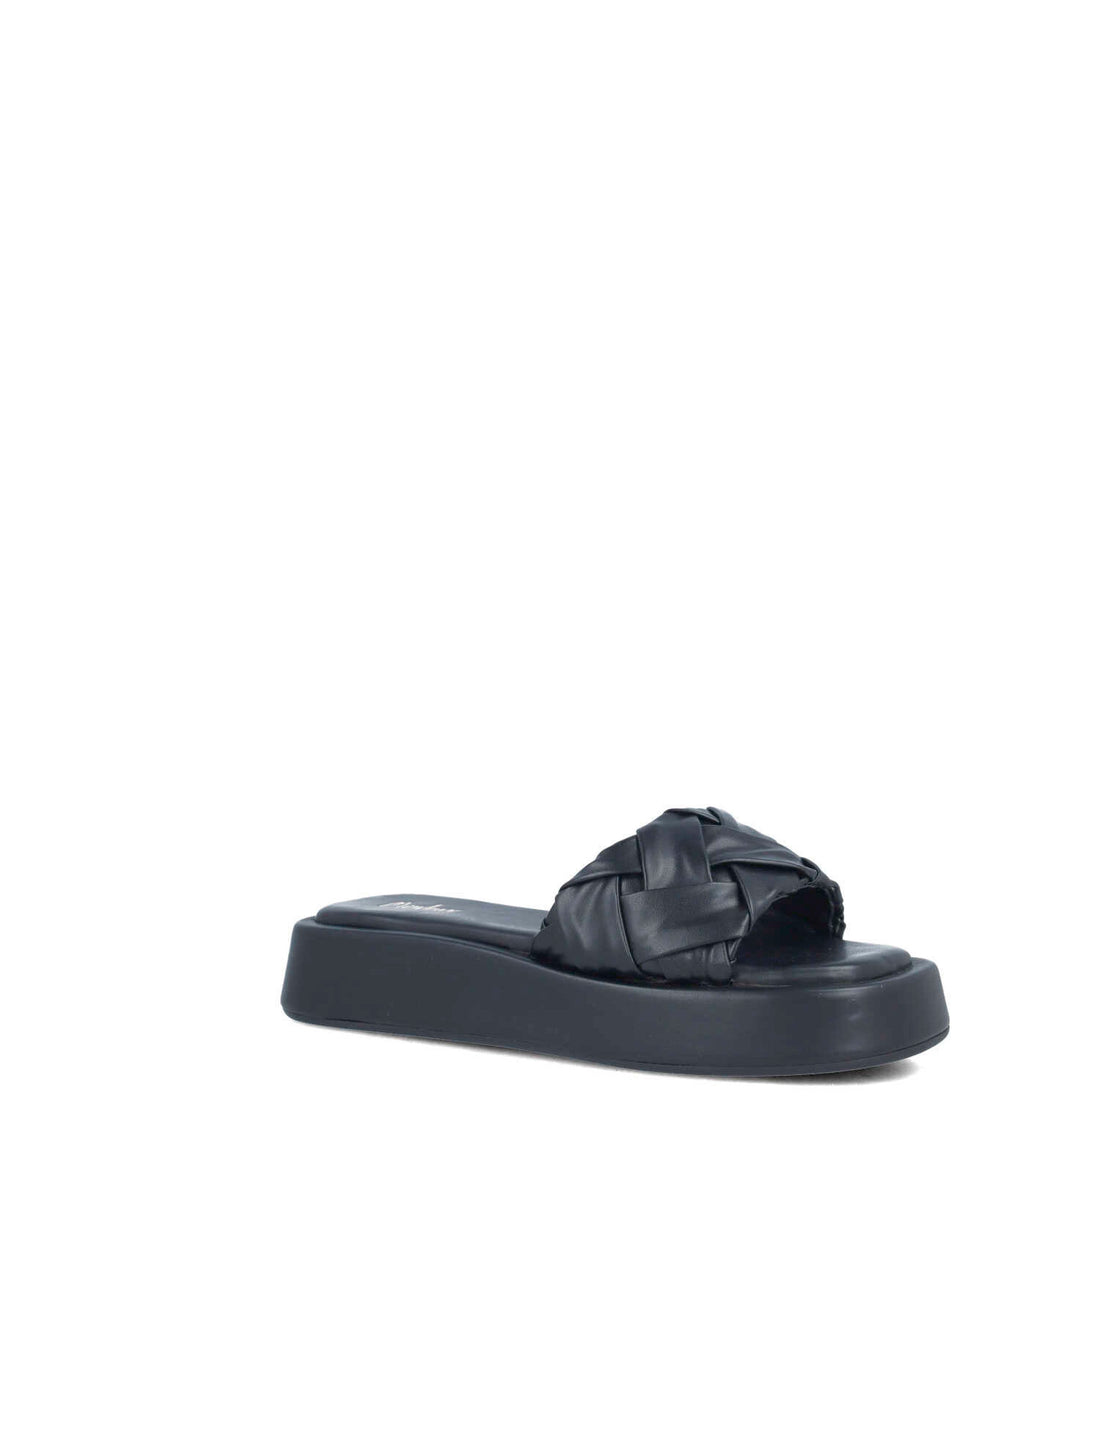 Black Platform Slippers_25561_01_02